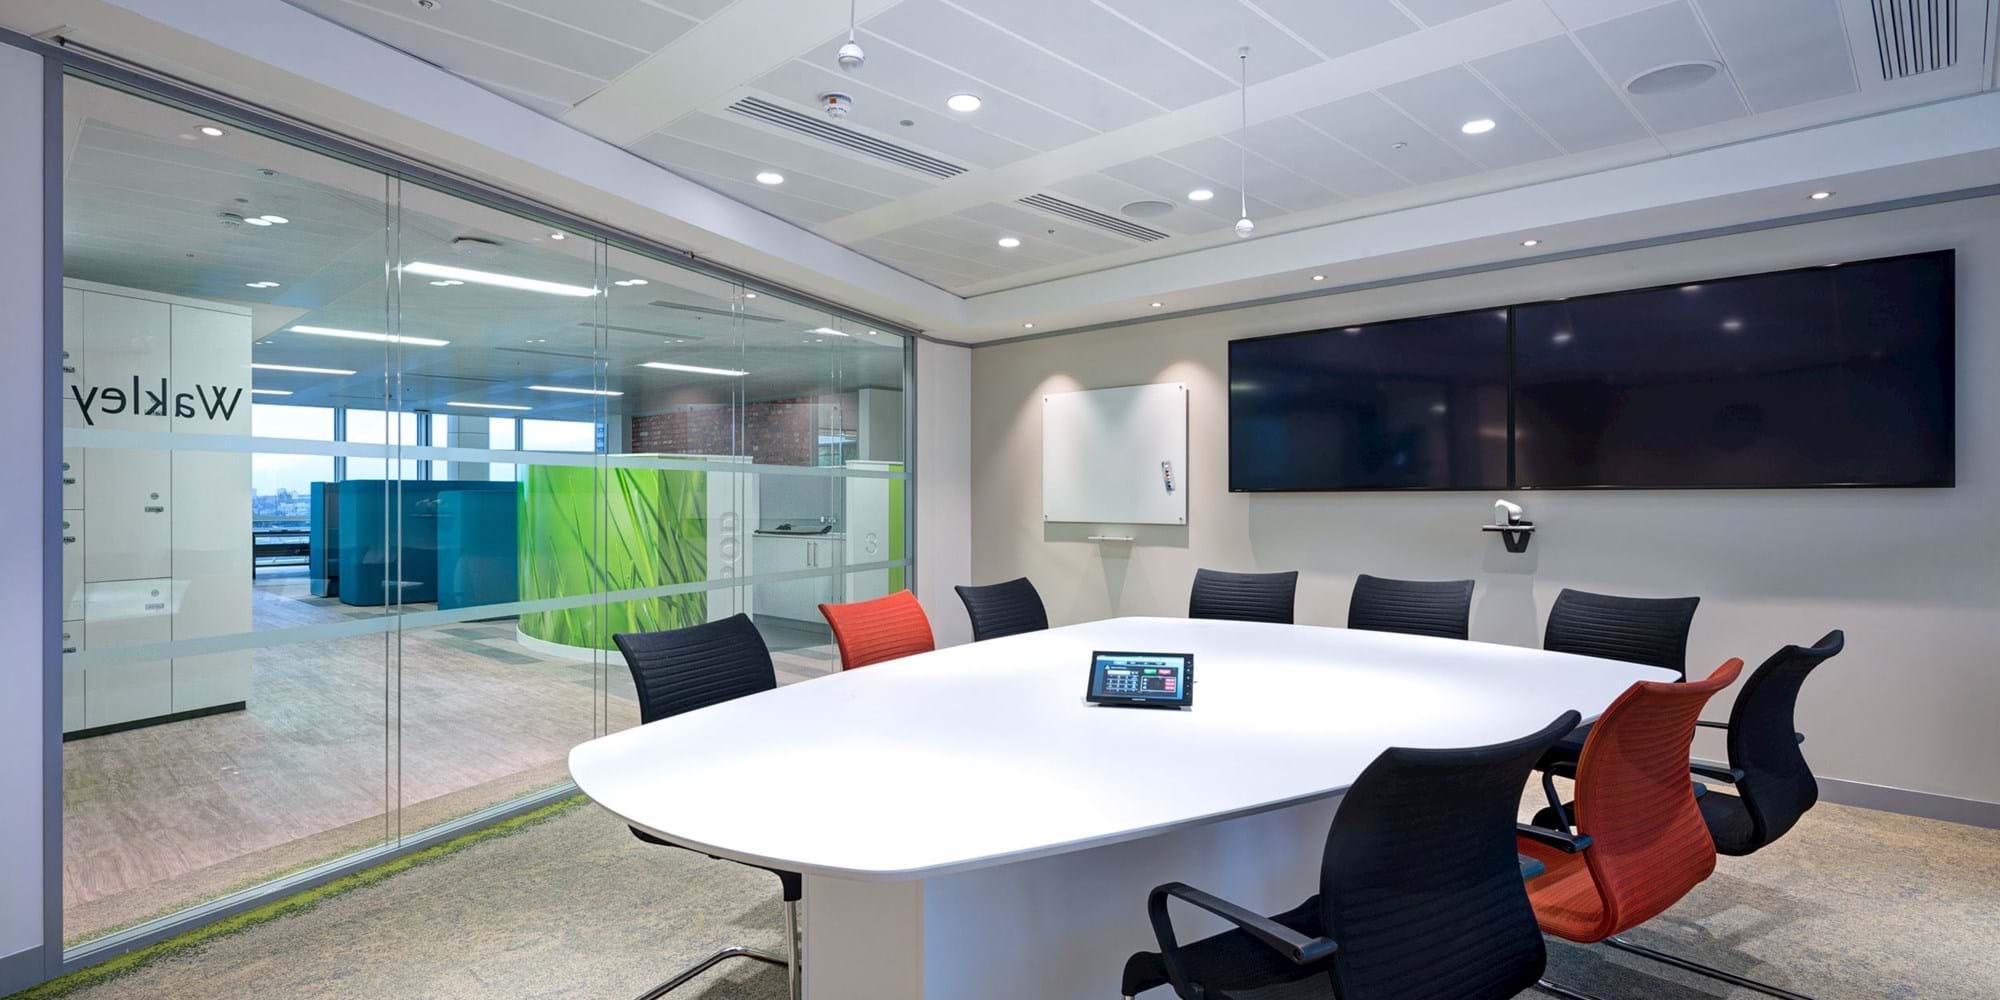 Modus Workspace office design, fit out and refurbishment - Reed Elsevier - Meeting Room - Reed Elsevier 08 darker highres sRGB.jpg